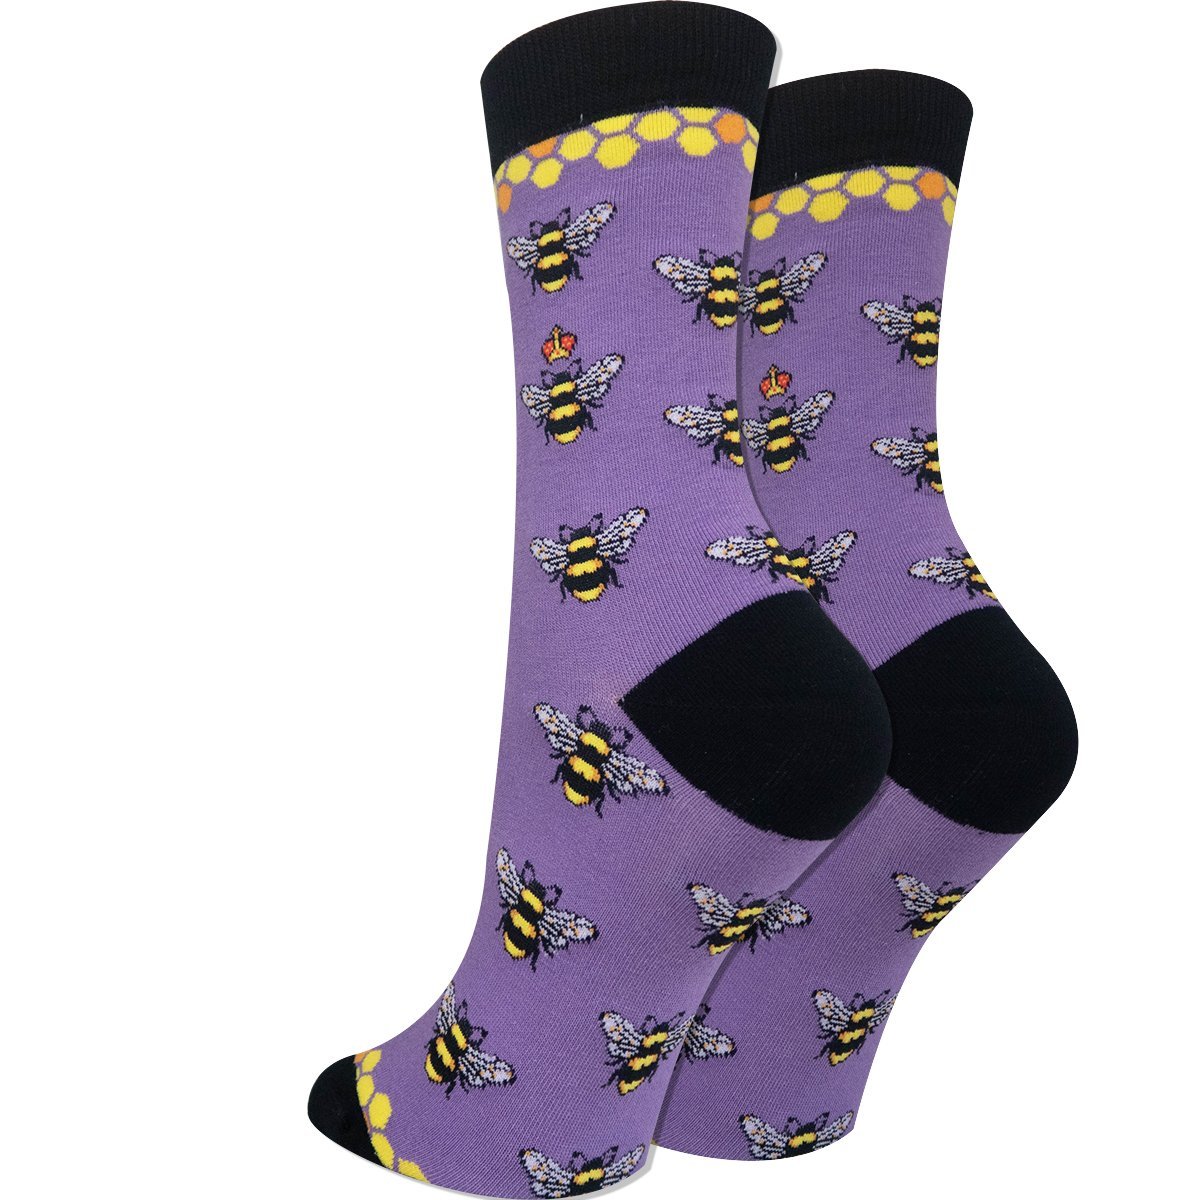 Bee Socks - Imagery Socks